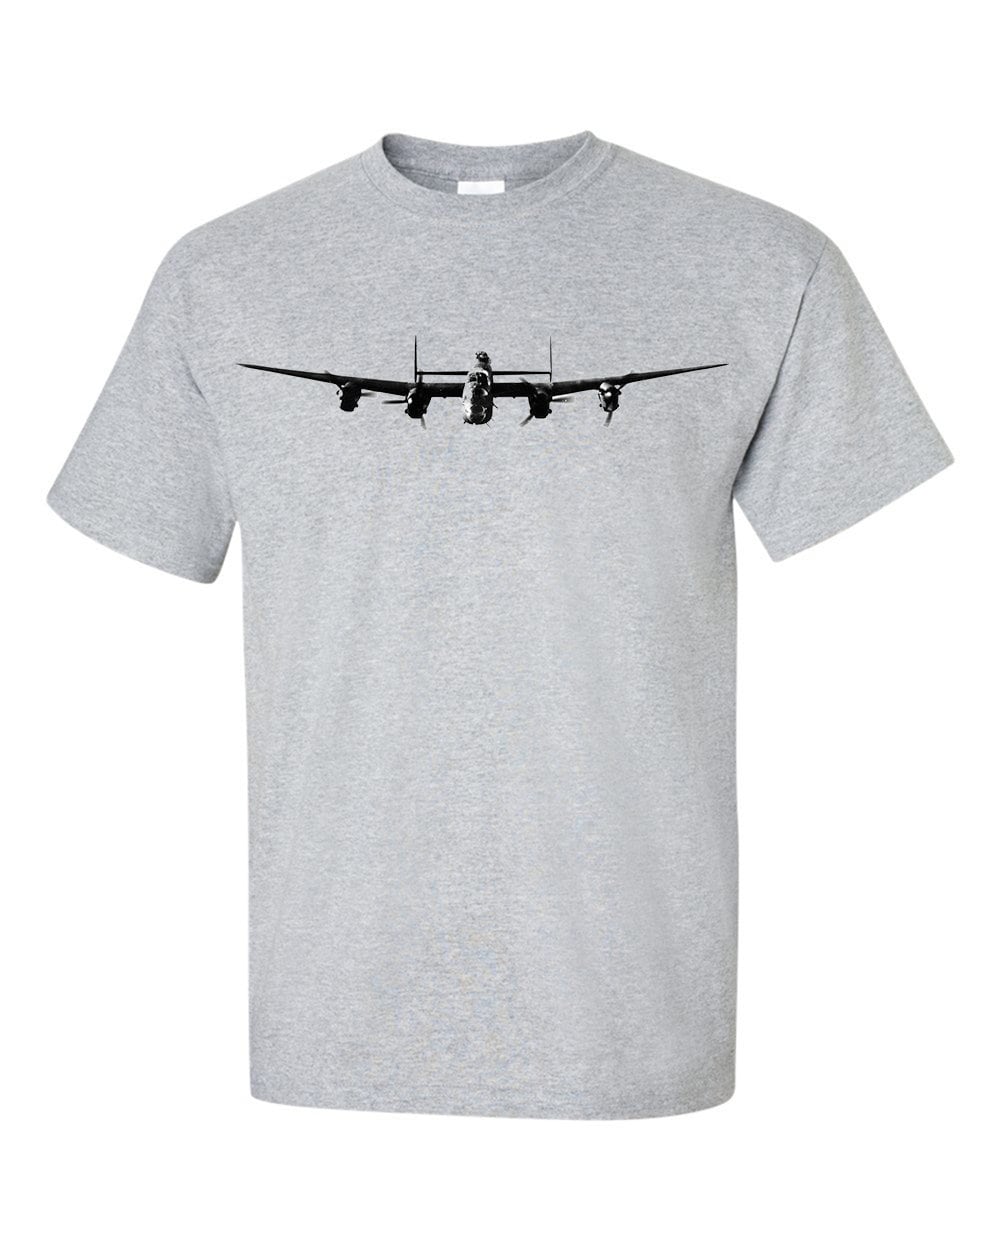 Lancaster Heavy Bomber Aircraft RAF WW2 T-Shirt